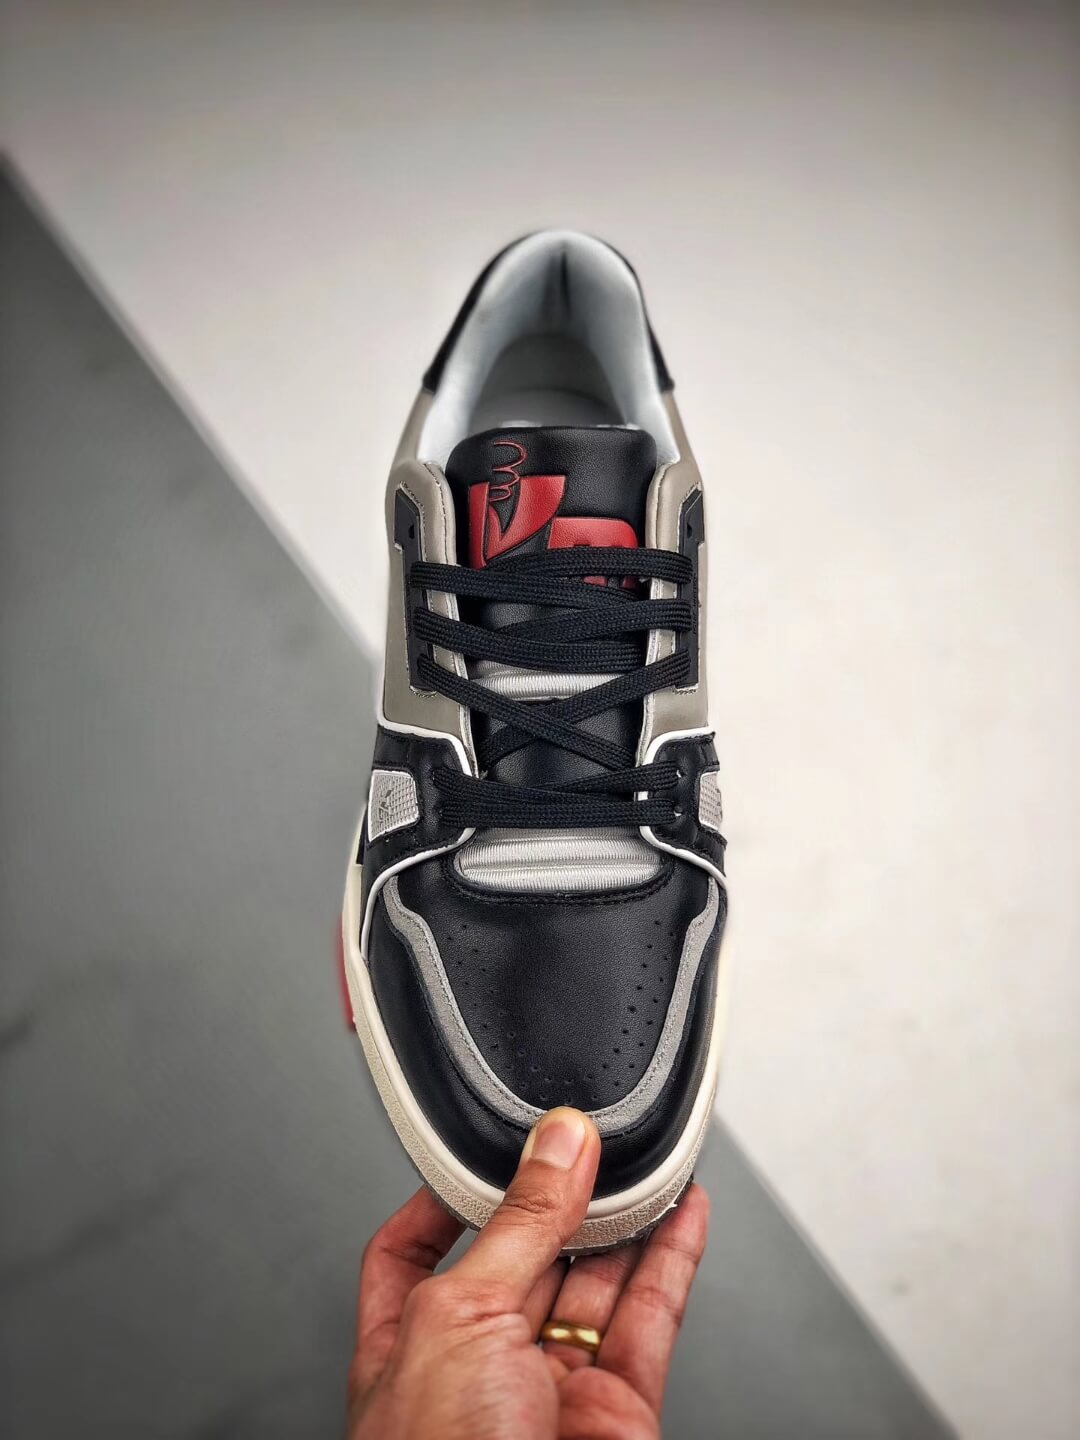 Louis Vuitton Uniform LV Trainer Black Suede Sneakers Virgil Abloh UK 7.5  US 8.5 for Sale in Los Angeles, CA - OfferUp